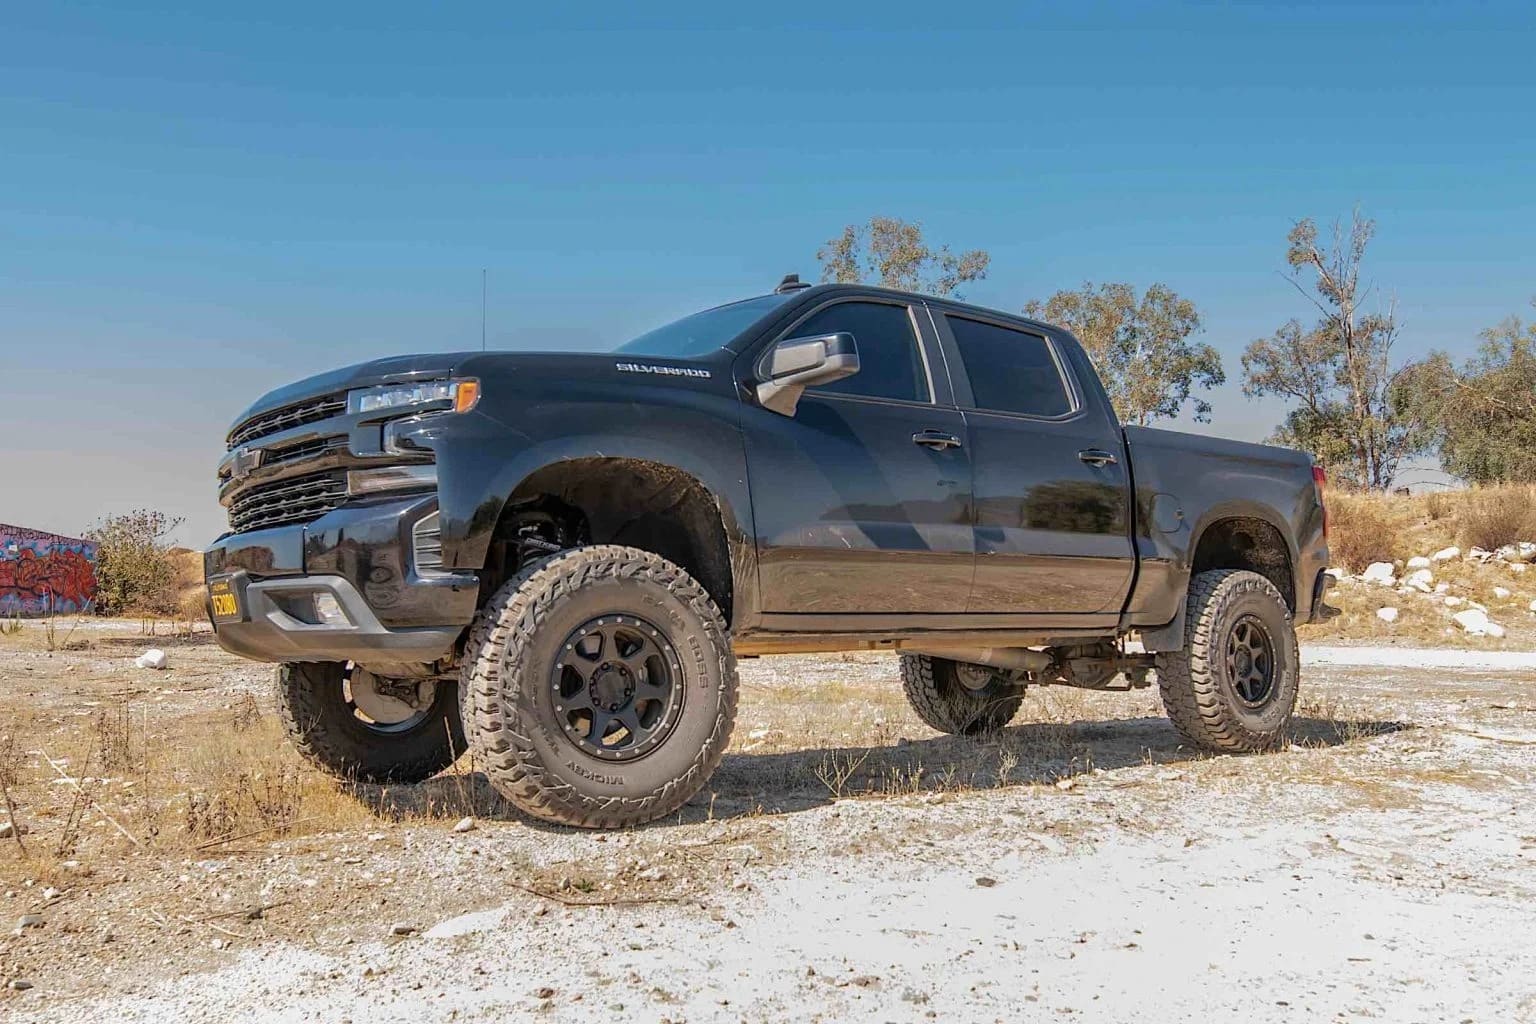 A 2019 Chevrolet Silverado on a dirt and rocky terrain.